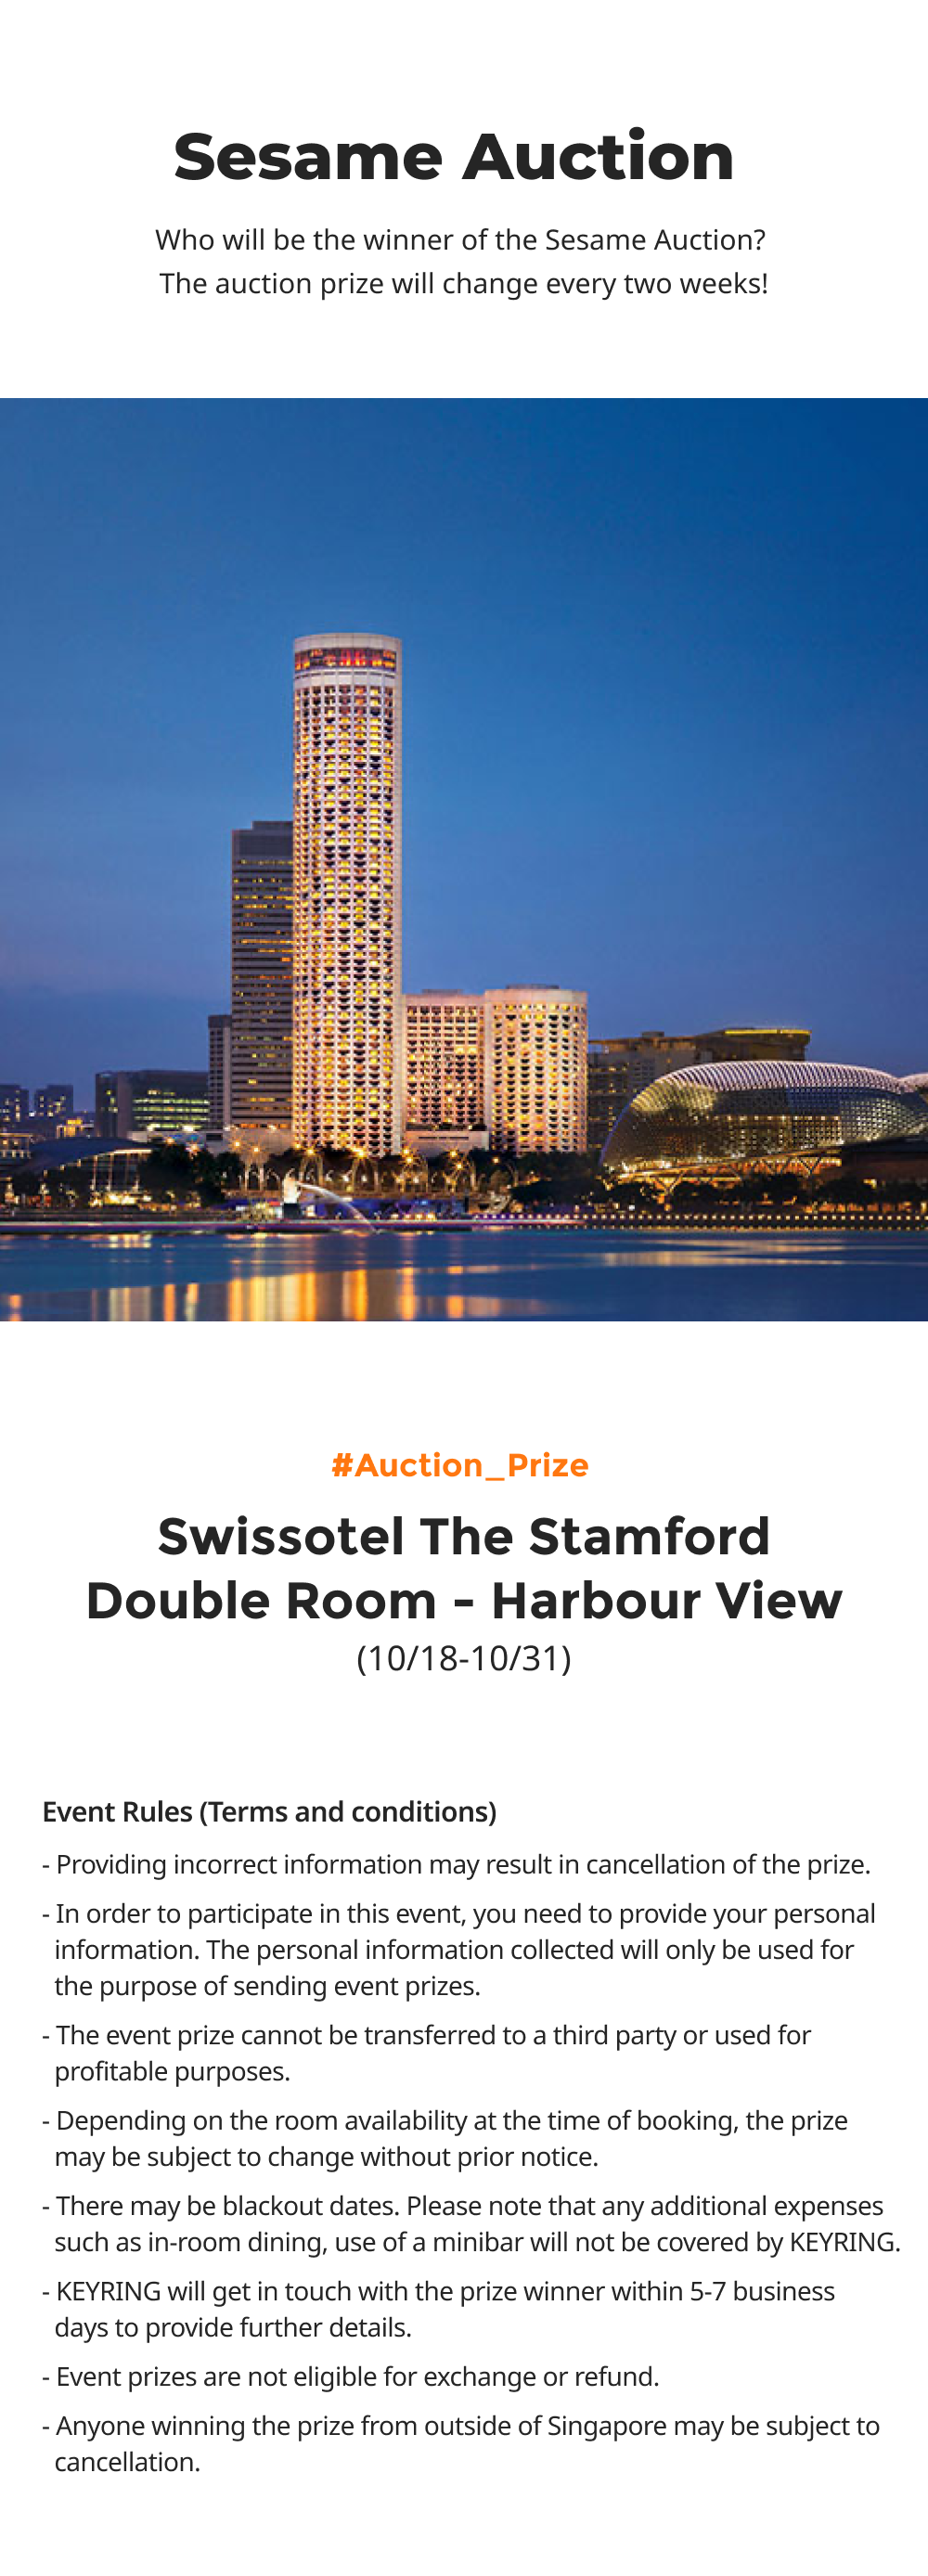 Singapore Sesame Auction Prize - Swissotel The Stamford